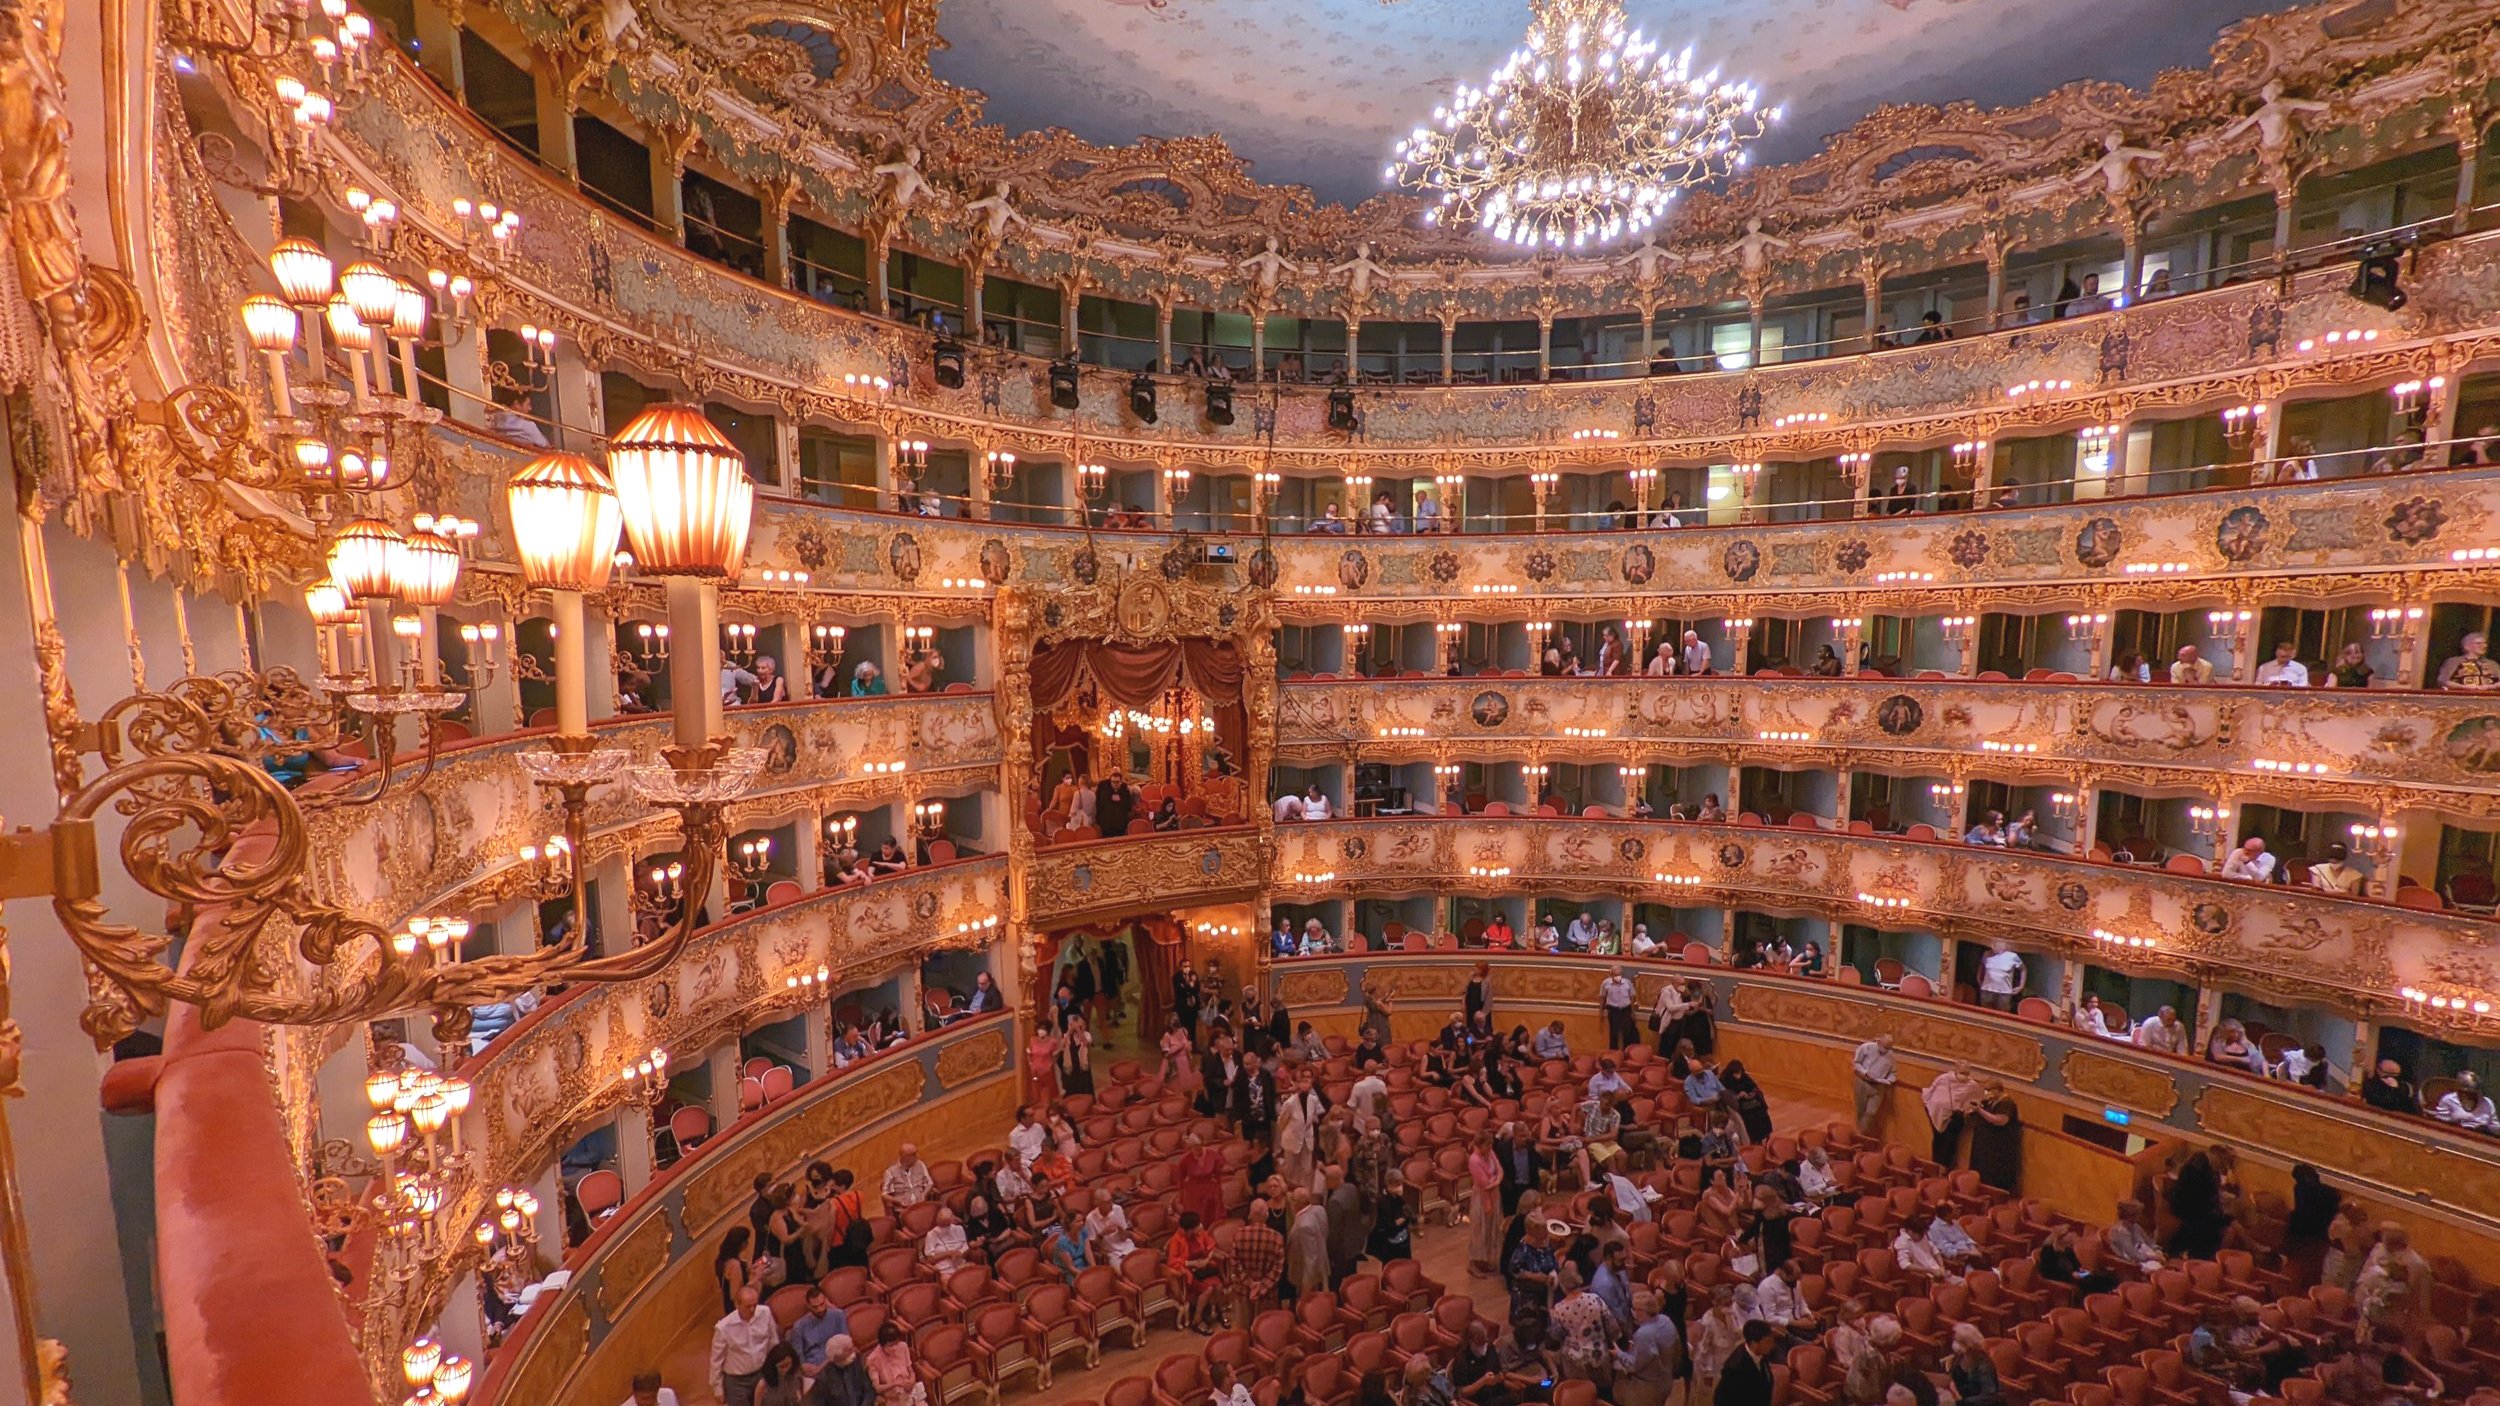 The triumphantly rebuilt opera house of La Fenice